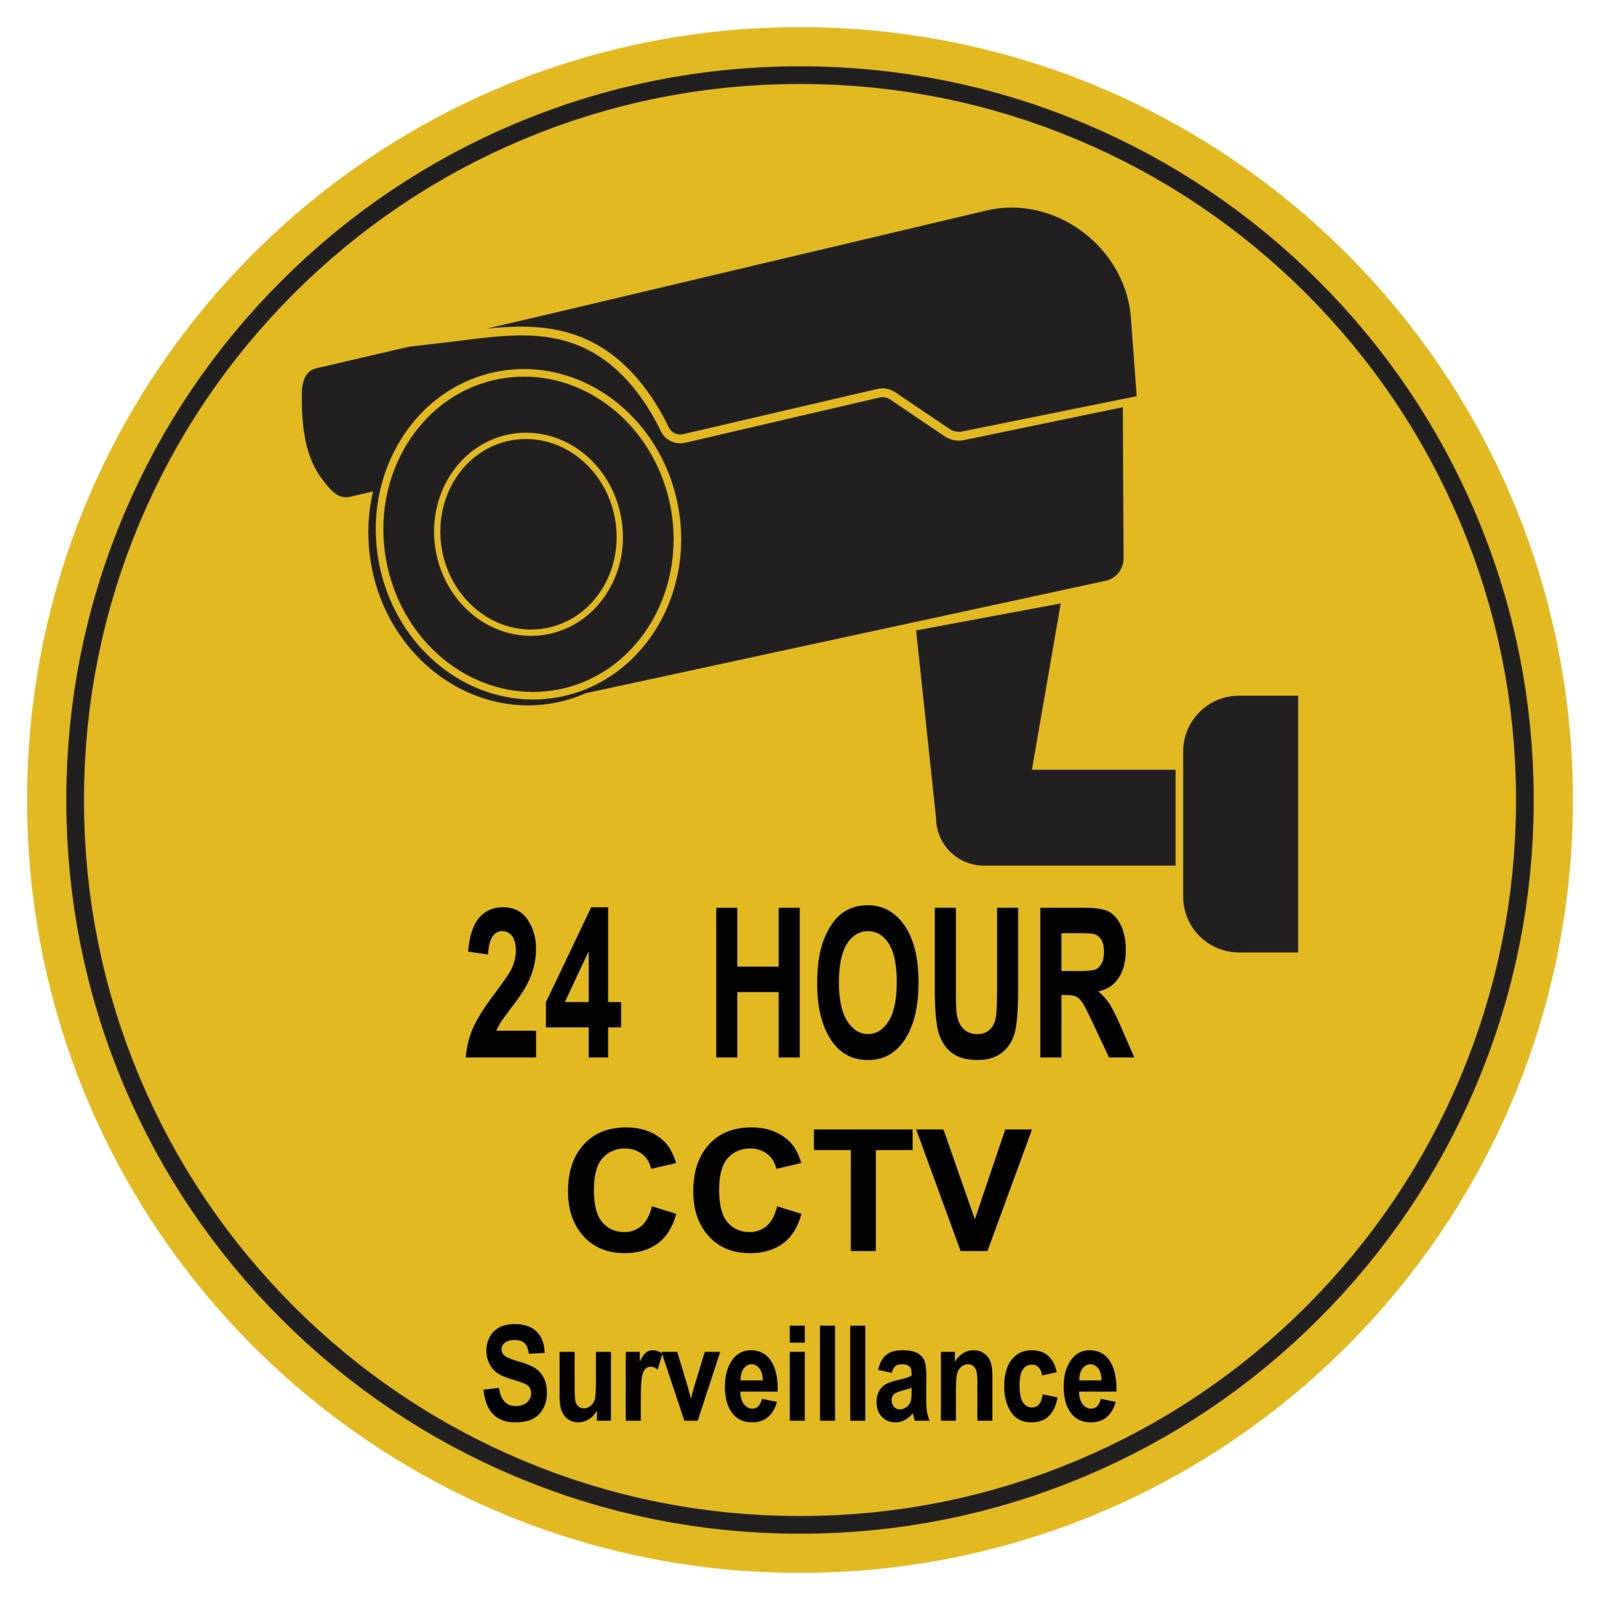 Security CCTV camera watch icon illustration